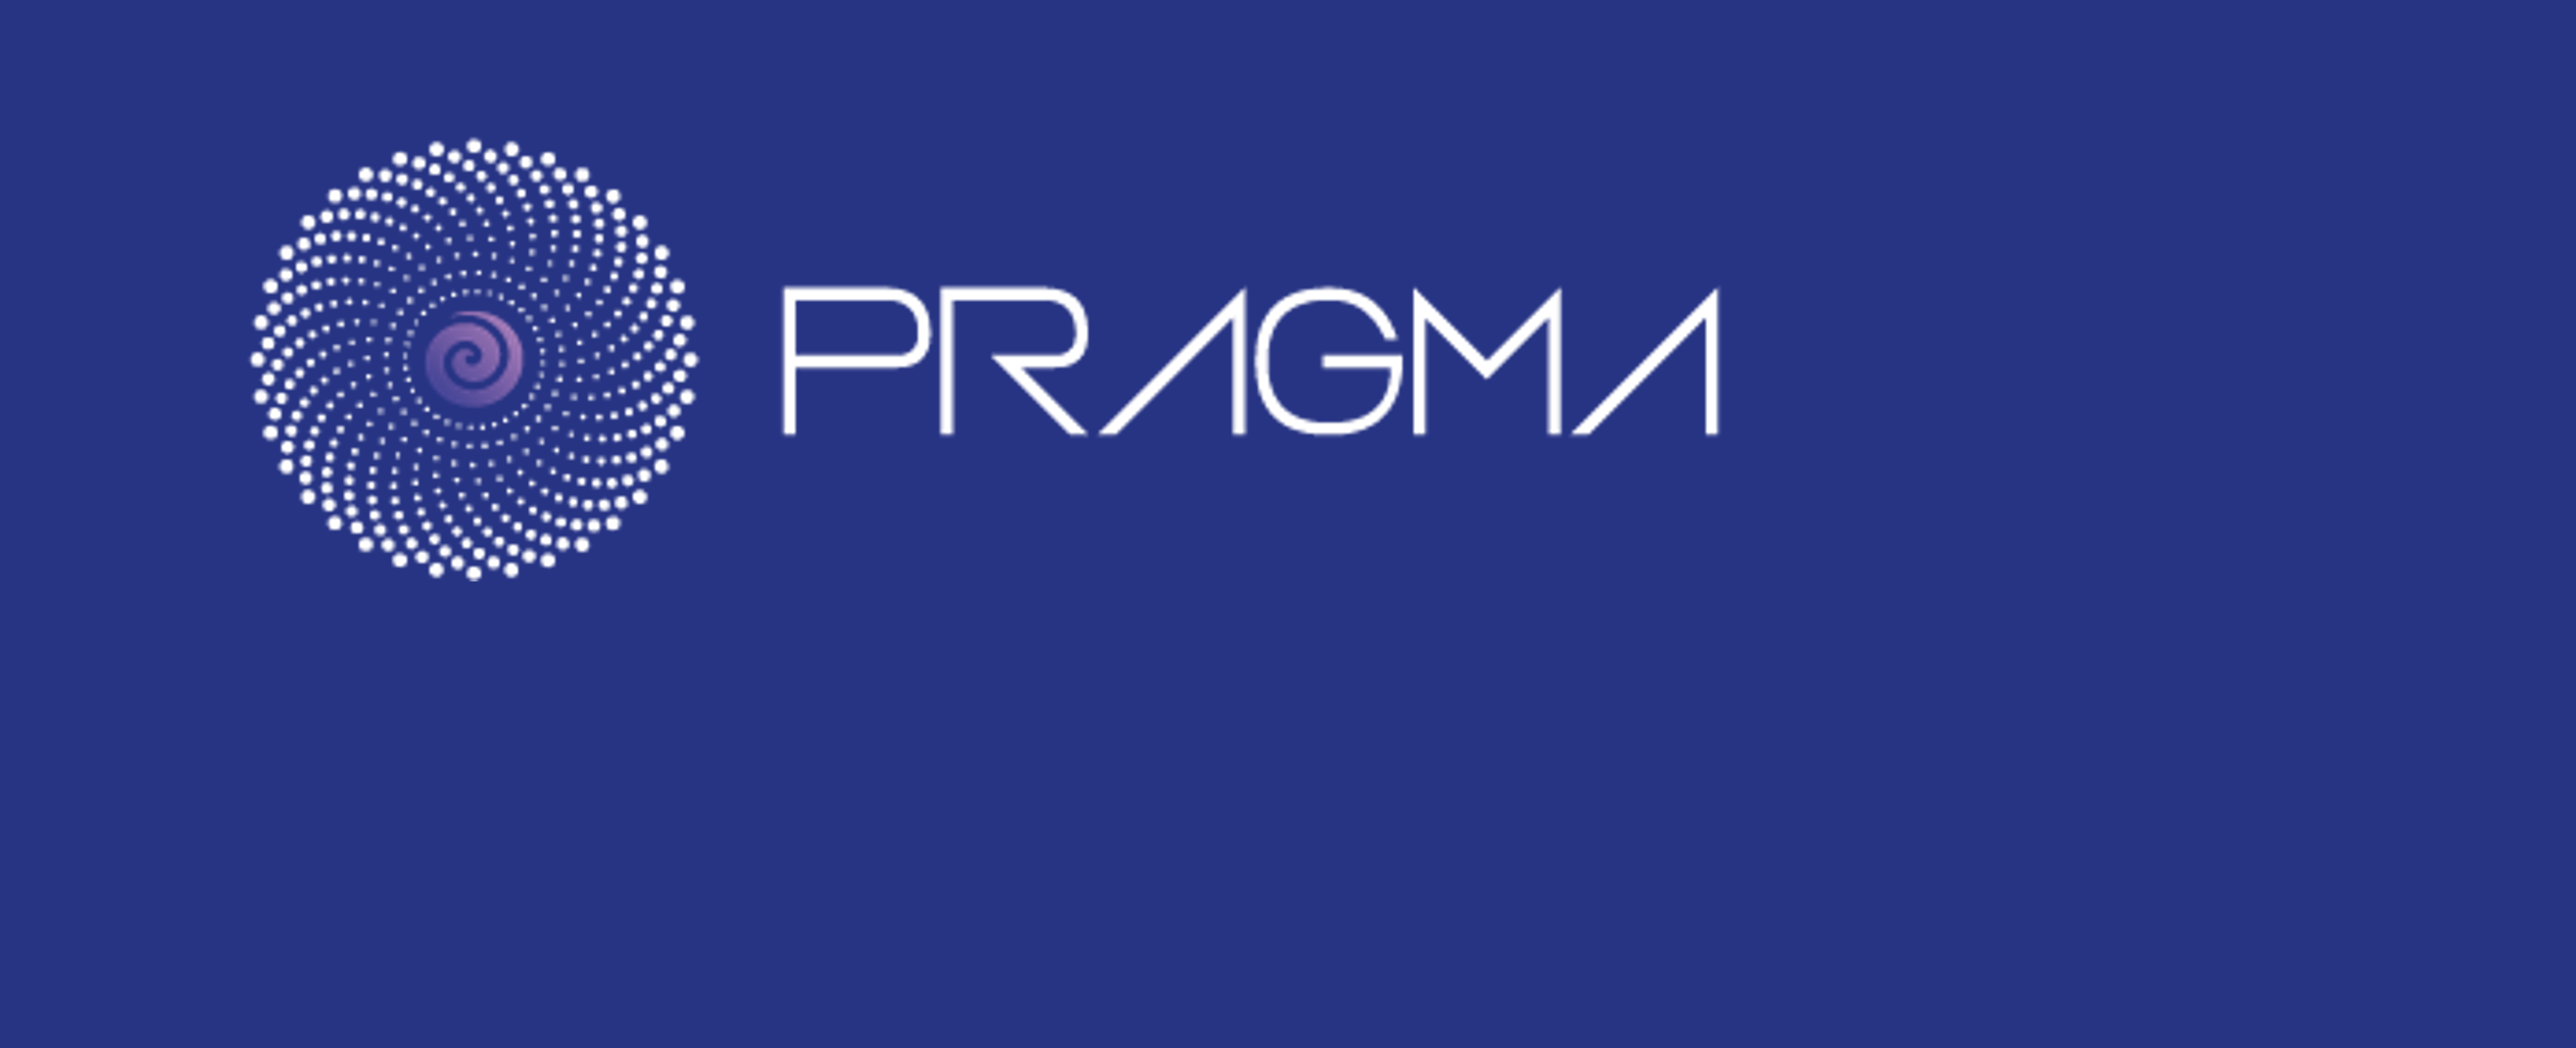 Pragma Group Dubai and Pragma Investments Management – are they legit?